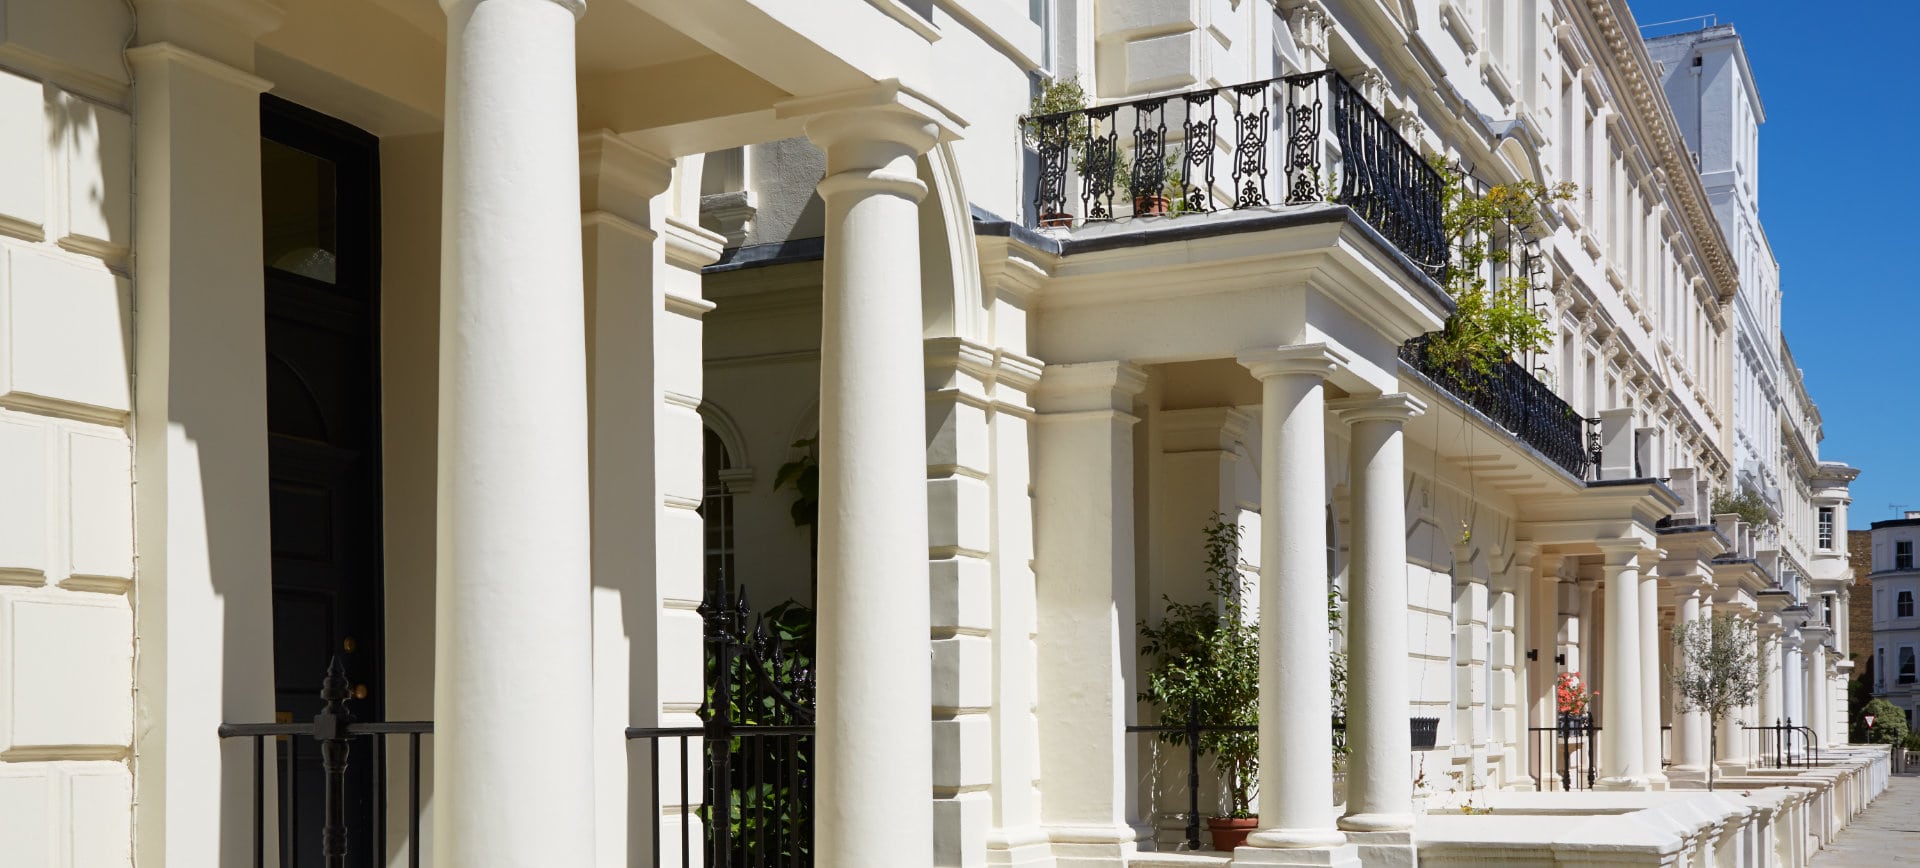 White luxury houses facades in London, borough of Kensington and